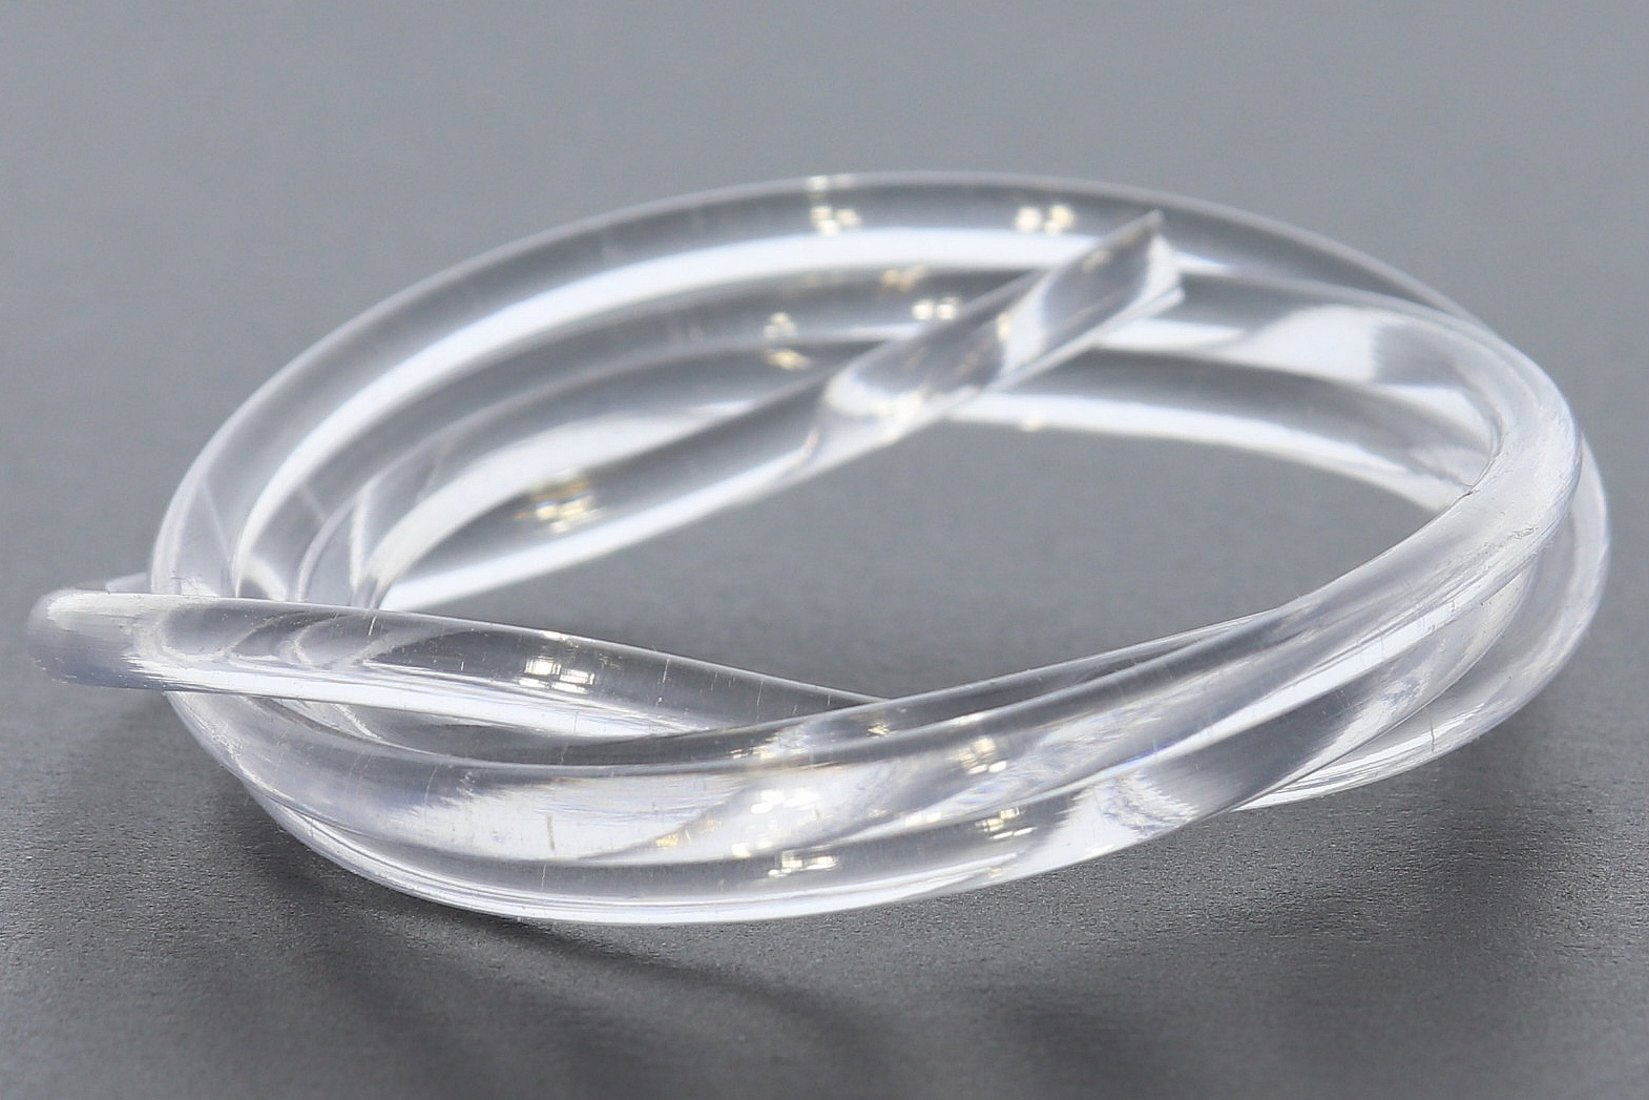 Kautschukband 3.0mm Ø 100cm transparent - Kautschuk Halsband